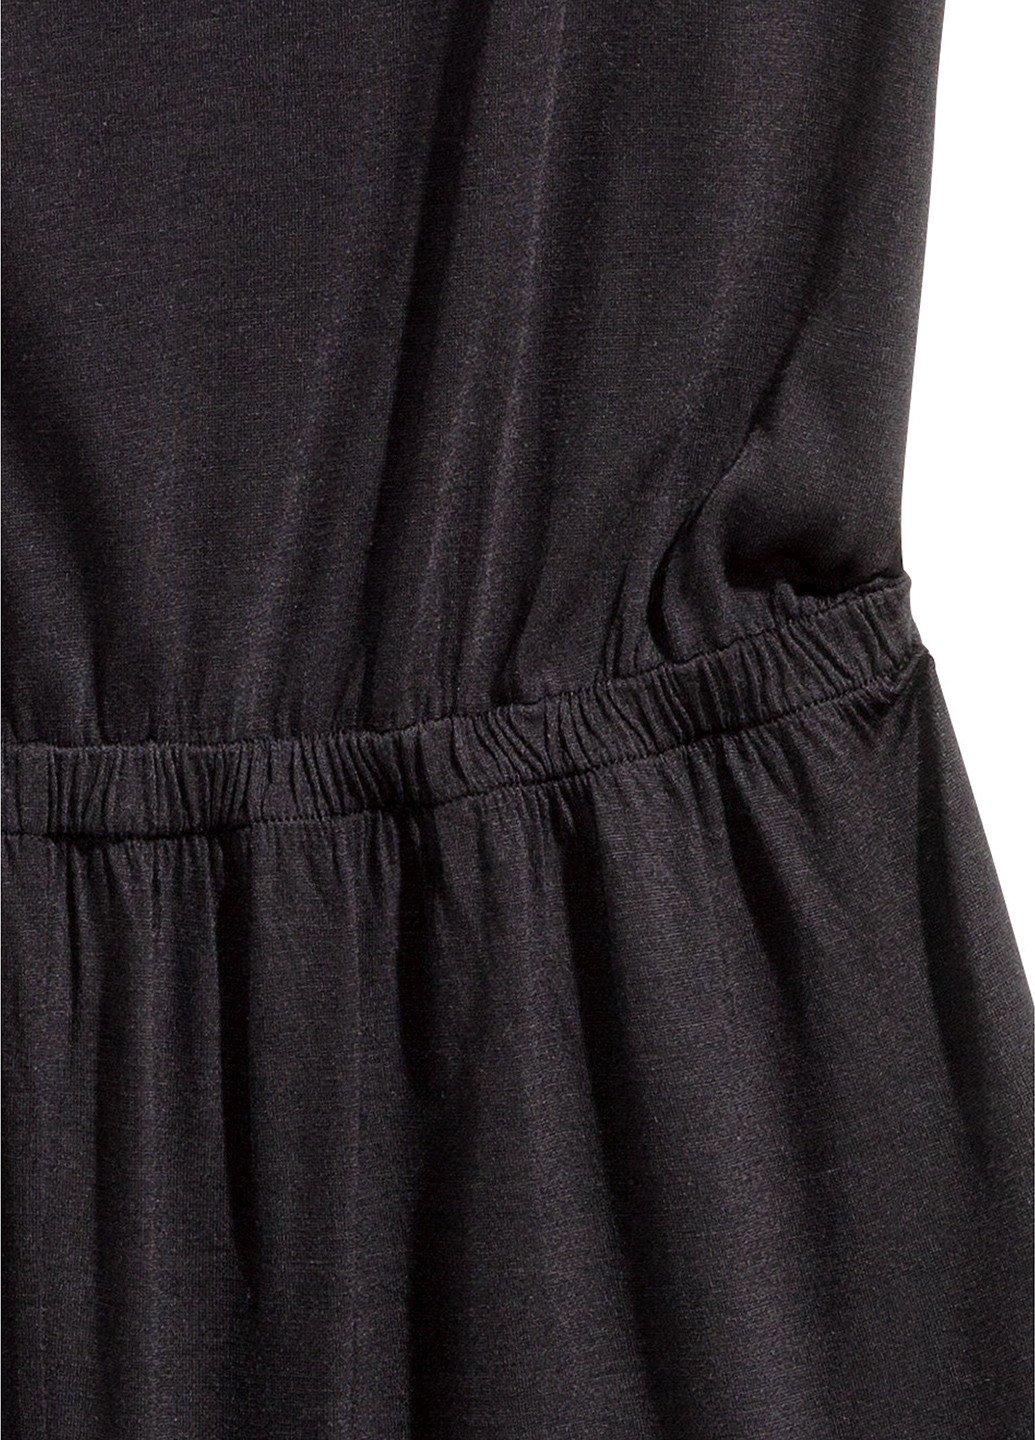 Комбинезон H&M комбинезон-шорты однотонный чёрный кэжуал вискоза